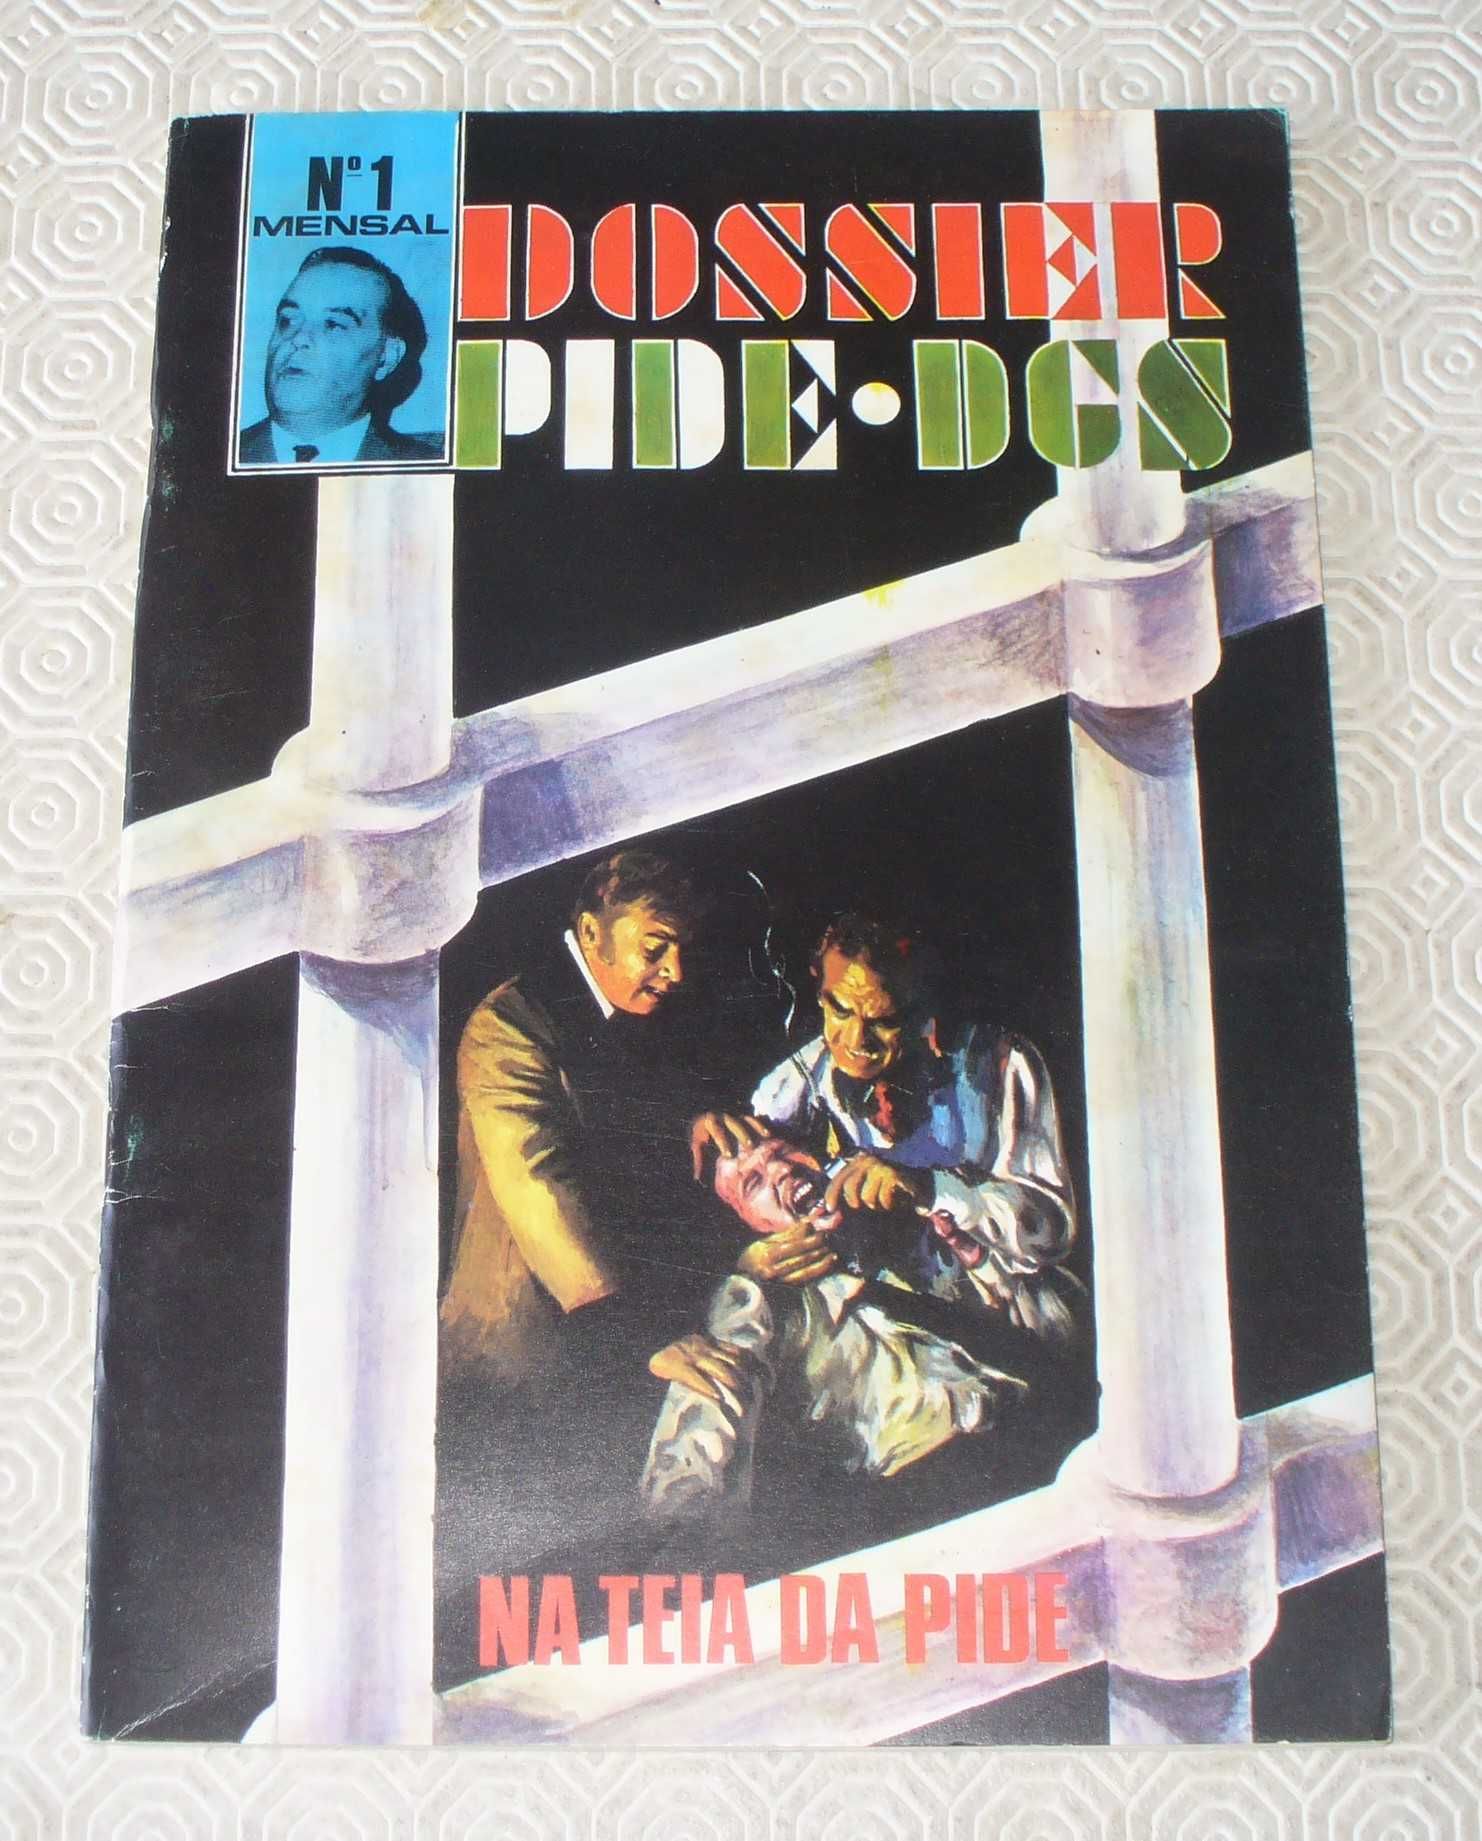 Dossier Pide-DGS nº 1 - Na teia da Pide - Vitor e Carlos Guedes